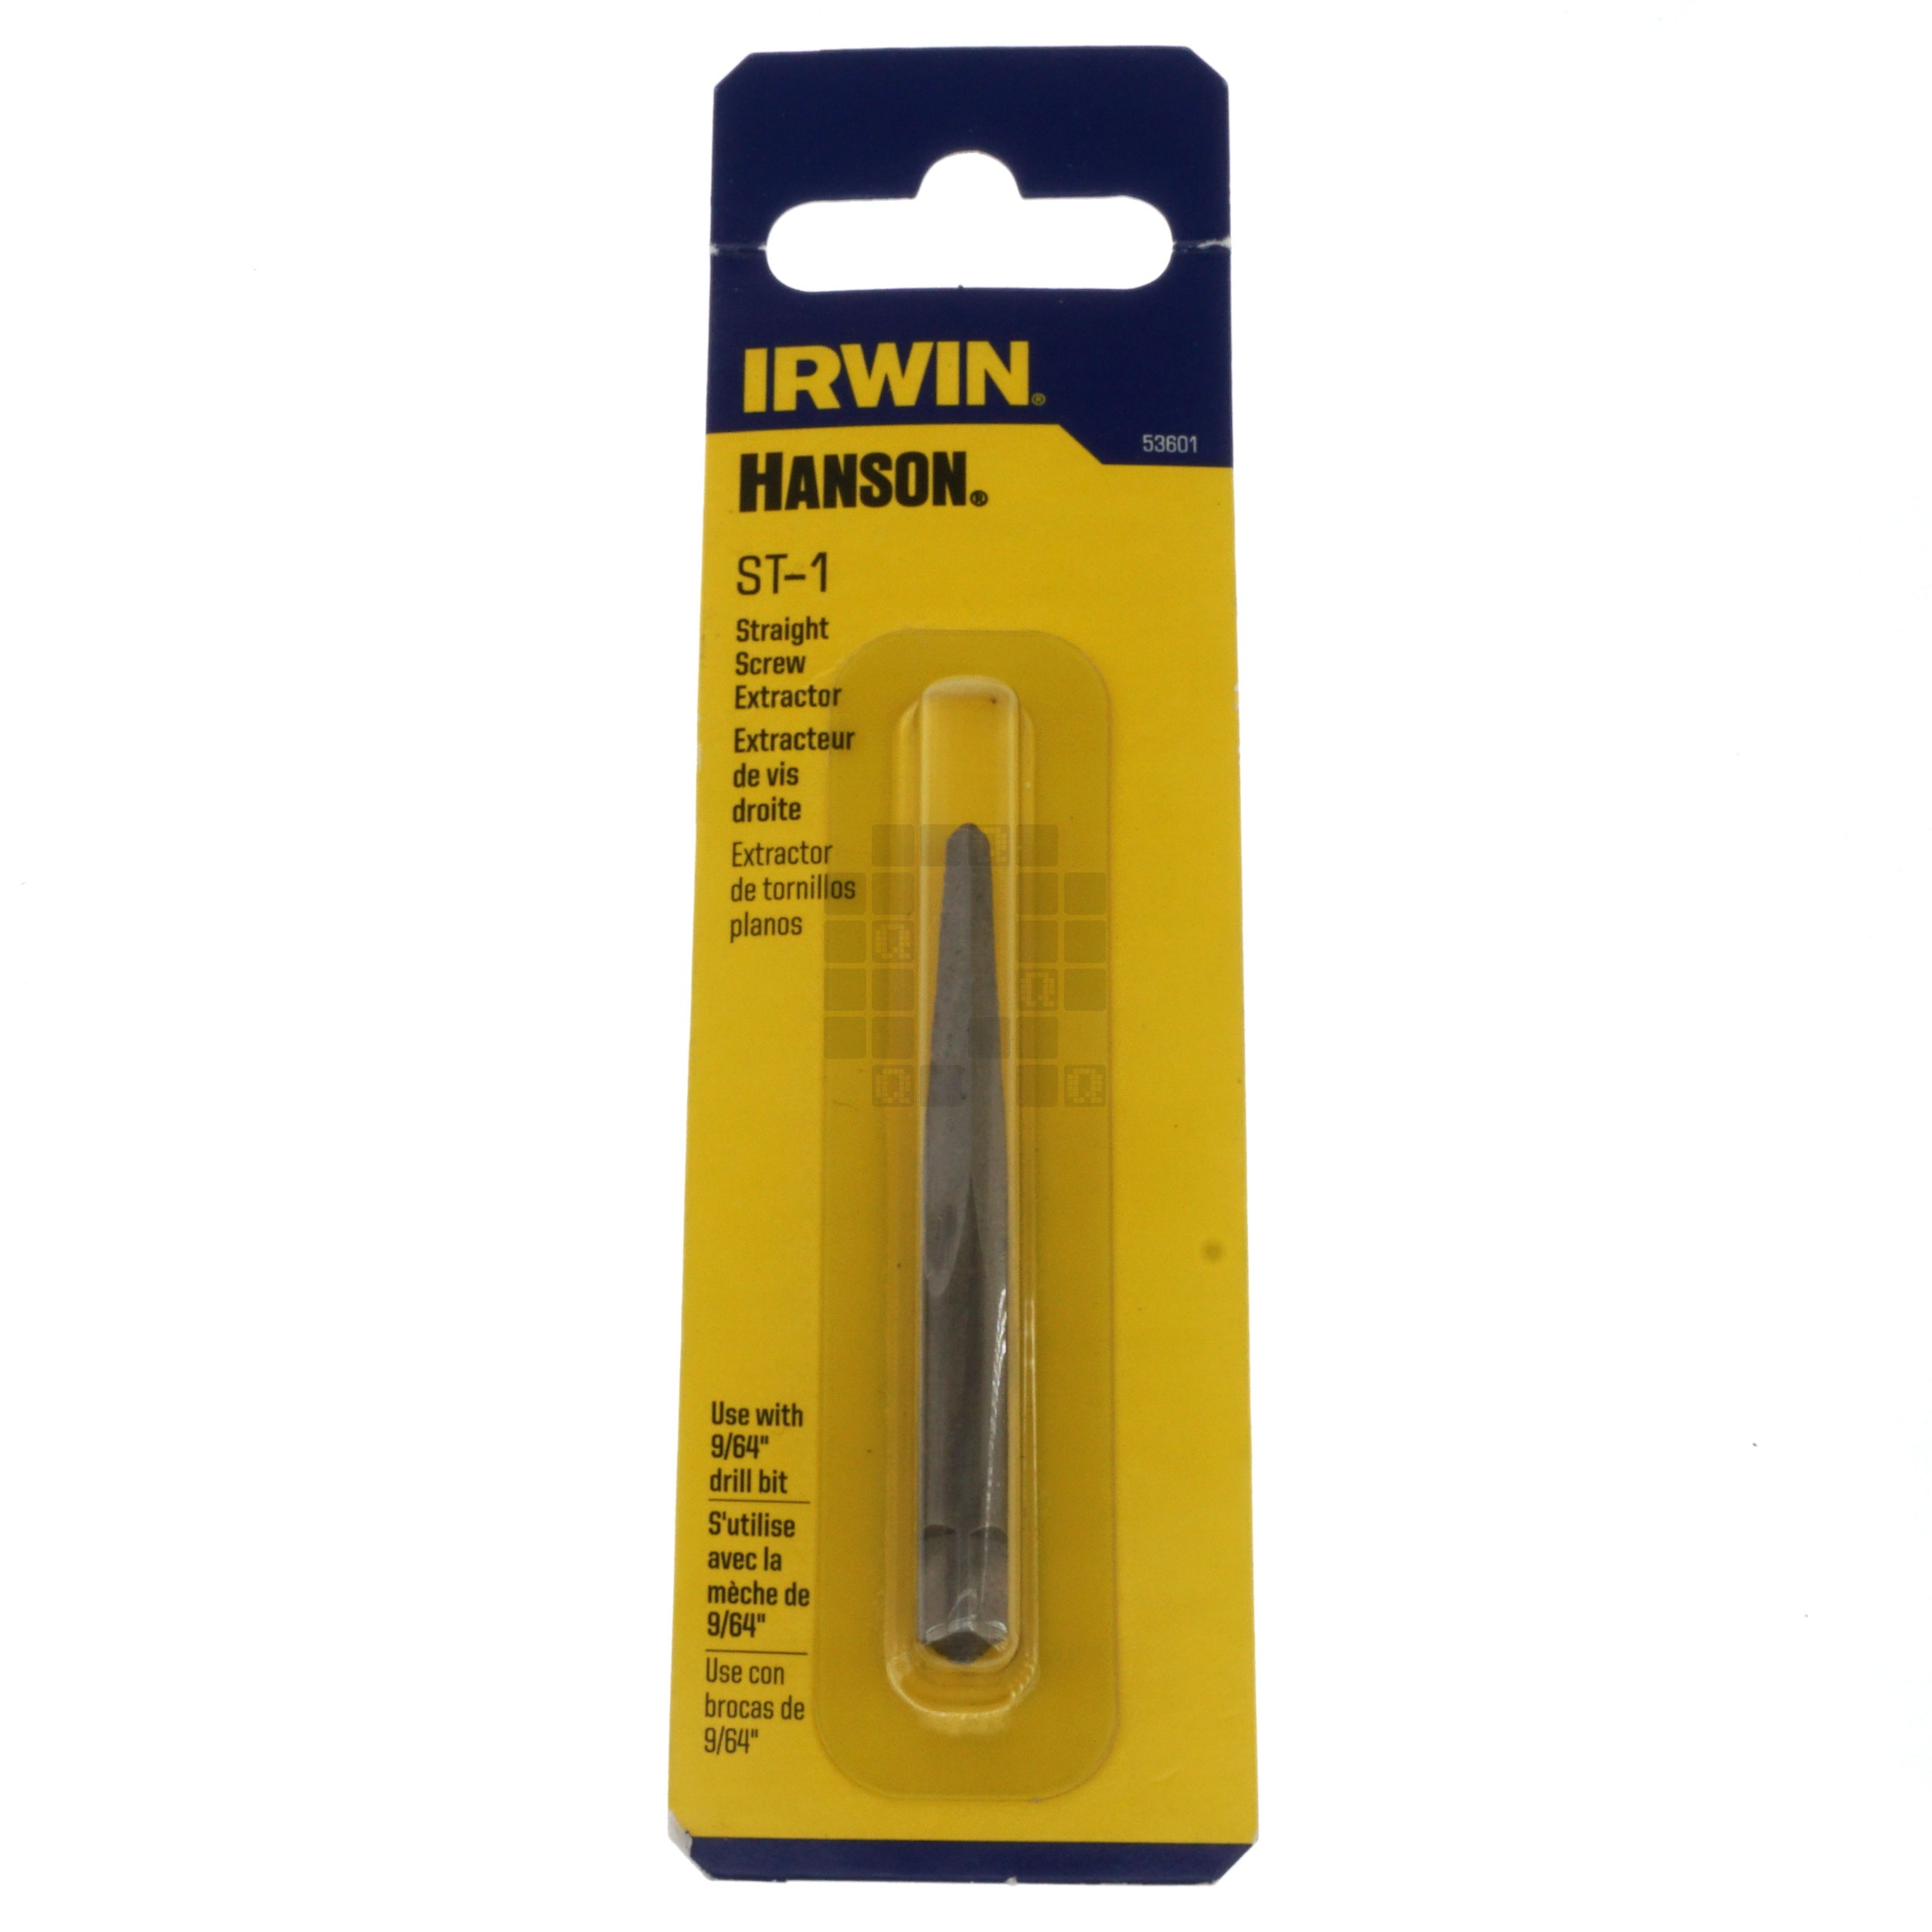 Irwin Hanson 53601 ST-1 Straight Screw Extractor